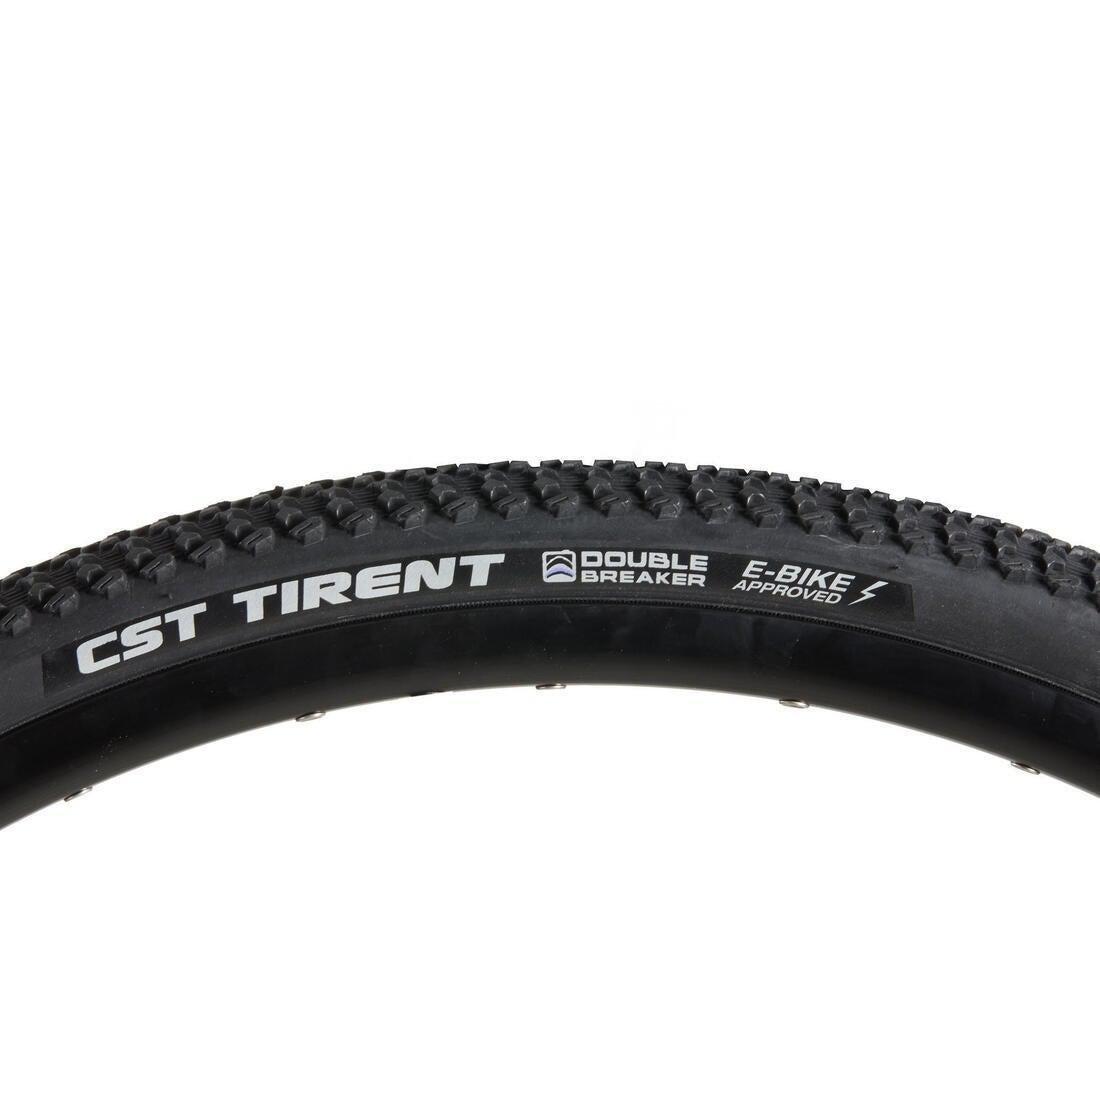 CST - Hybrid Bike Tyre Electric Bike Compatible Cst Tirent